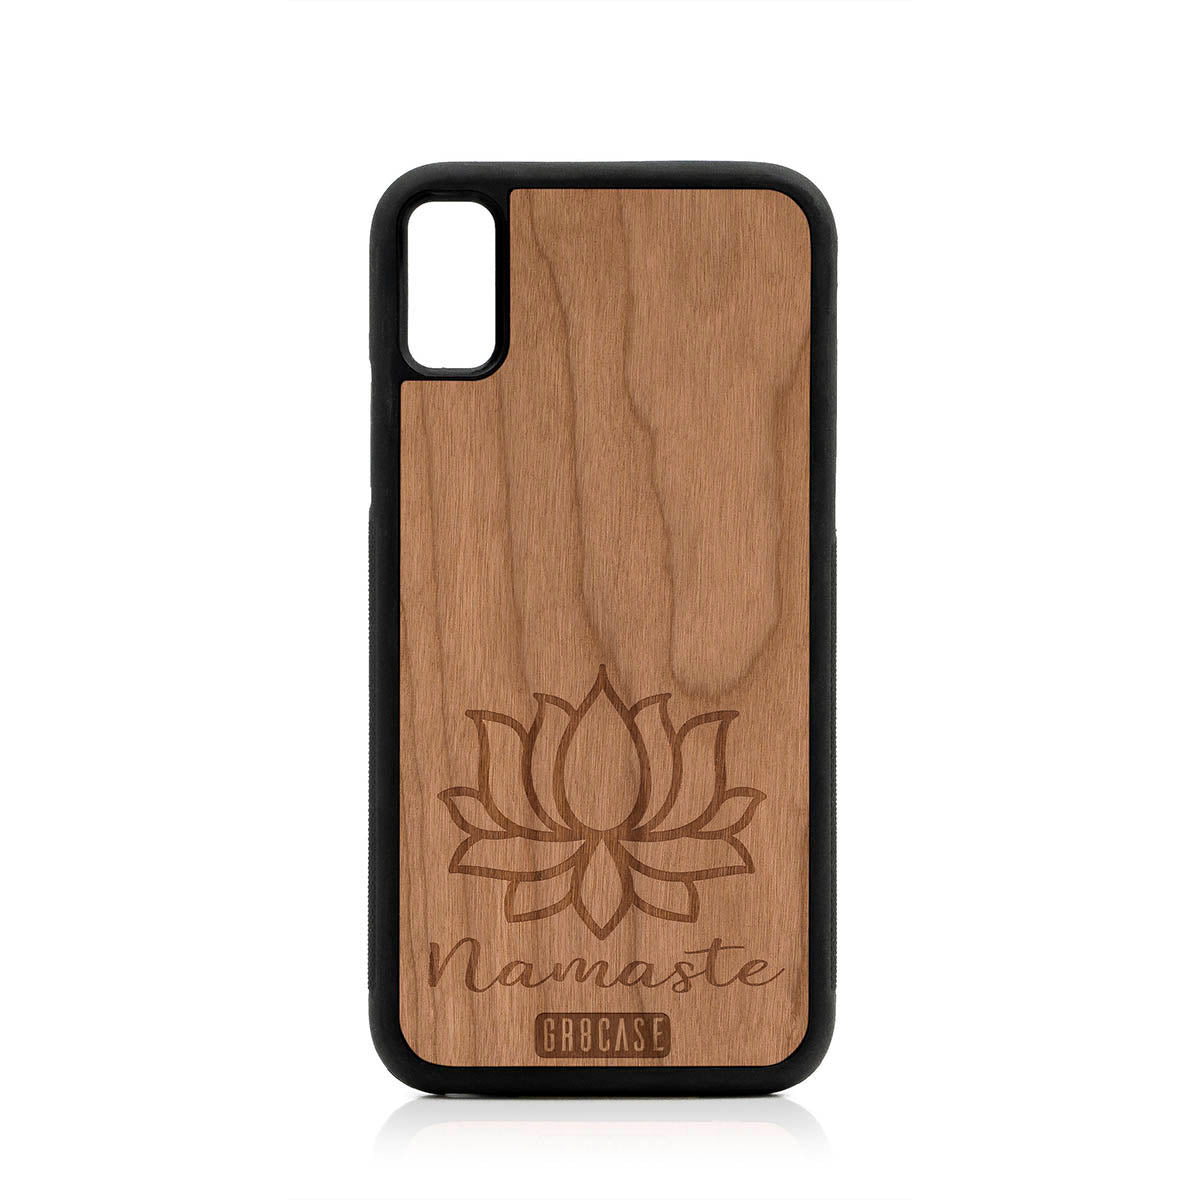 Namaste (Lotus Flower) Design Wood Case For iPhone X/XS